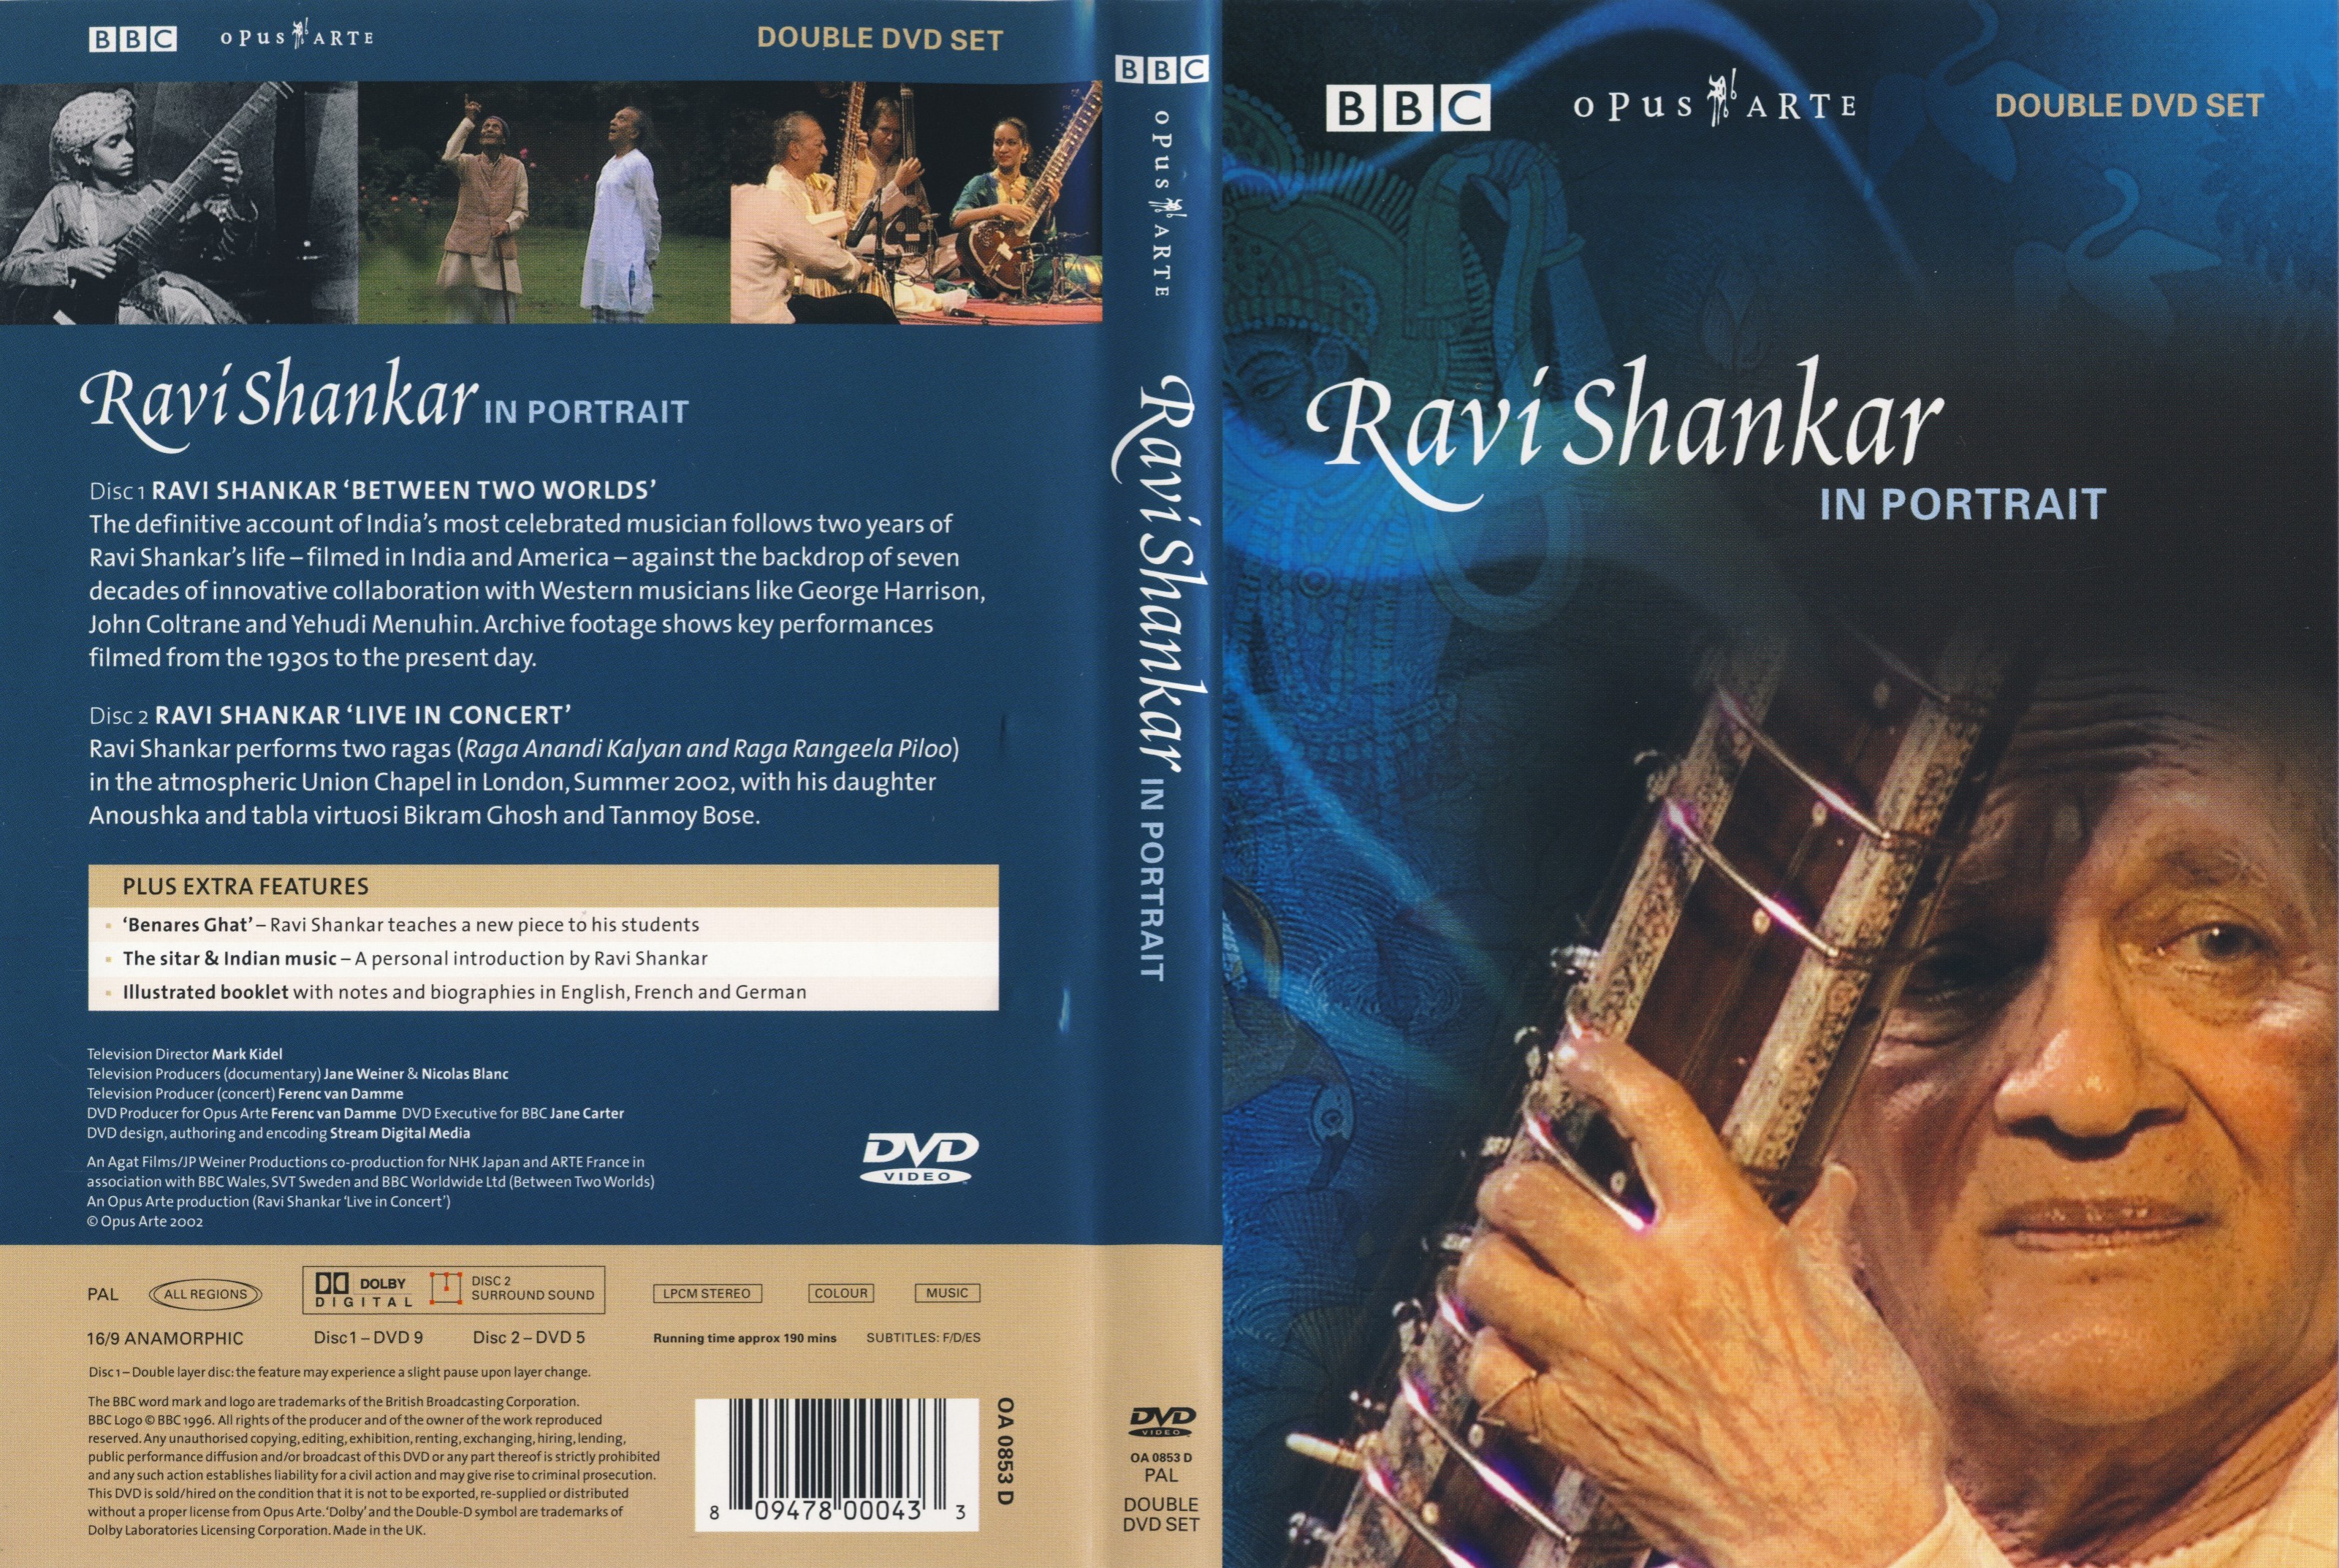 Jaquette DVD Ravi Shankar in portrait